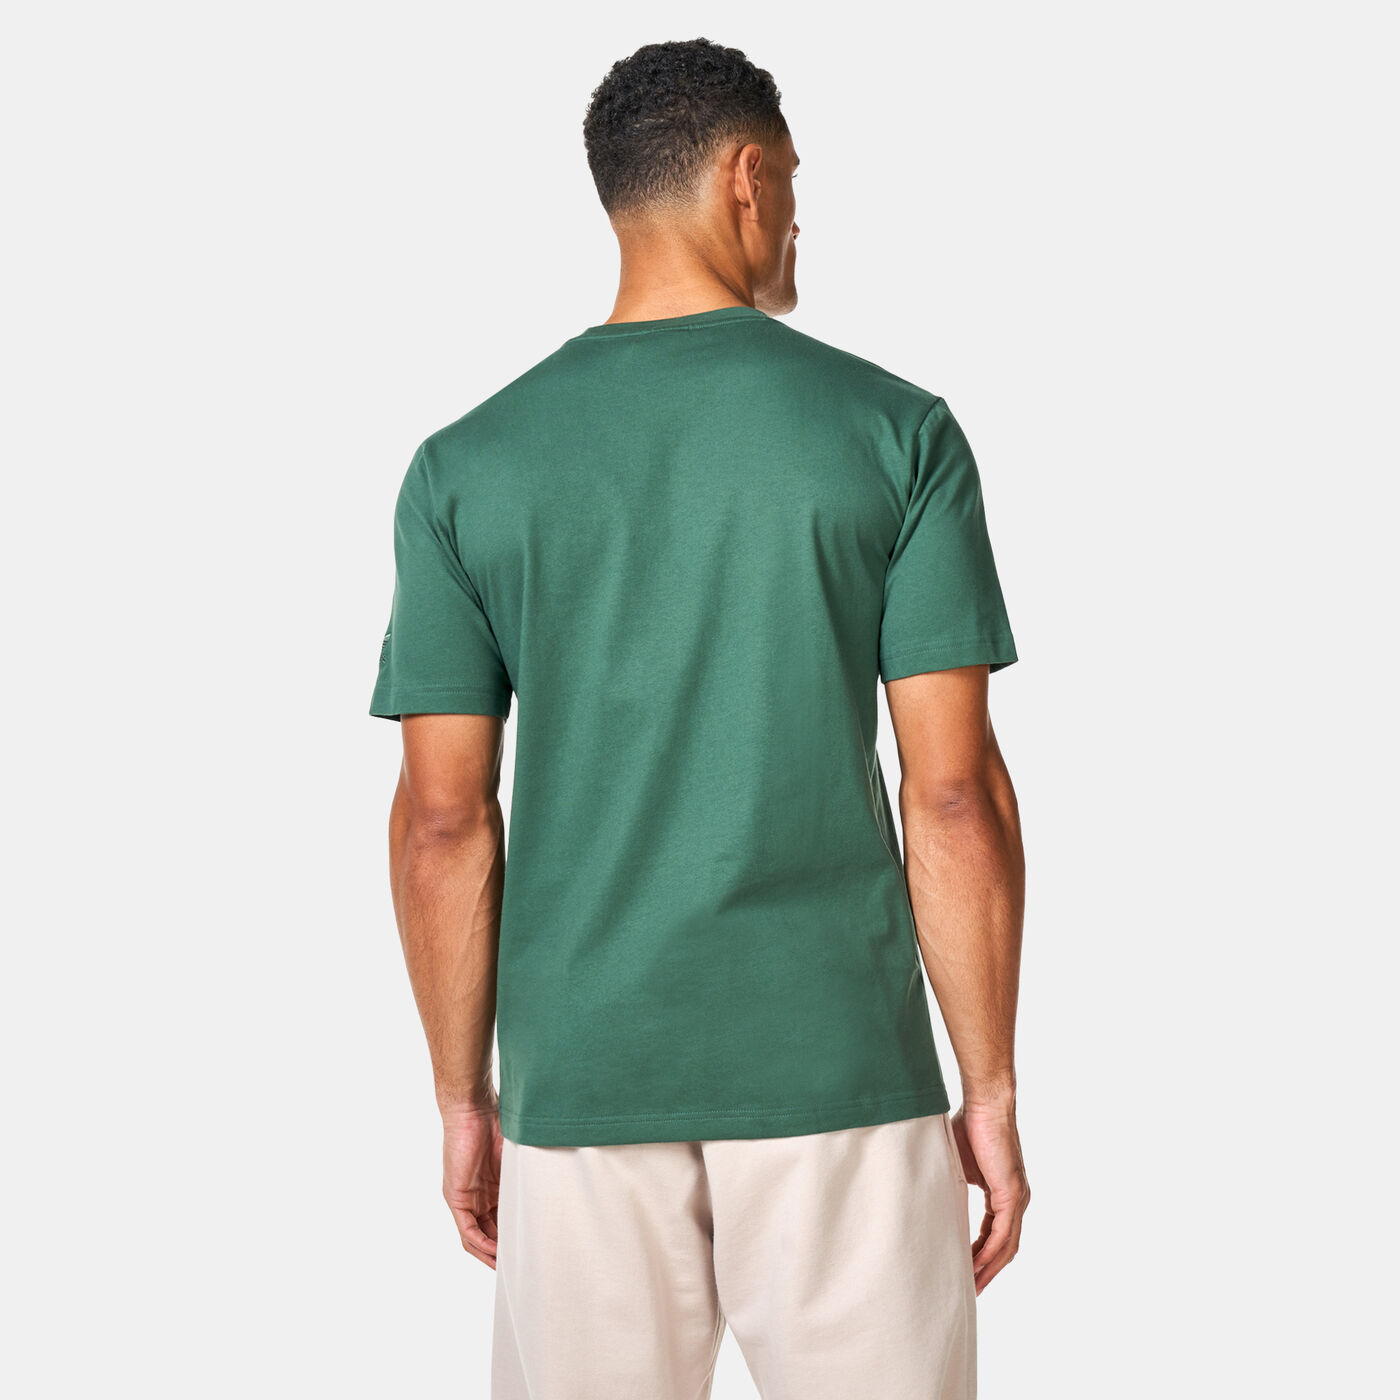 Men's Training Supply T-Shirt